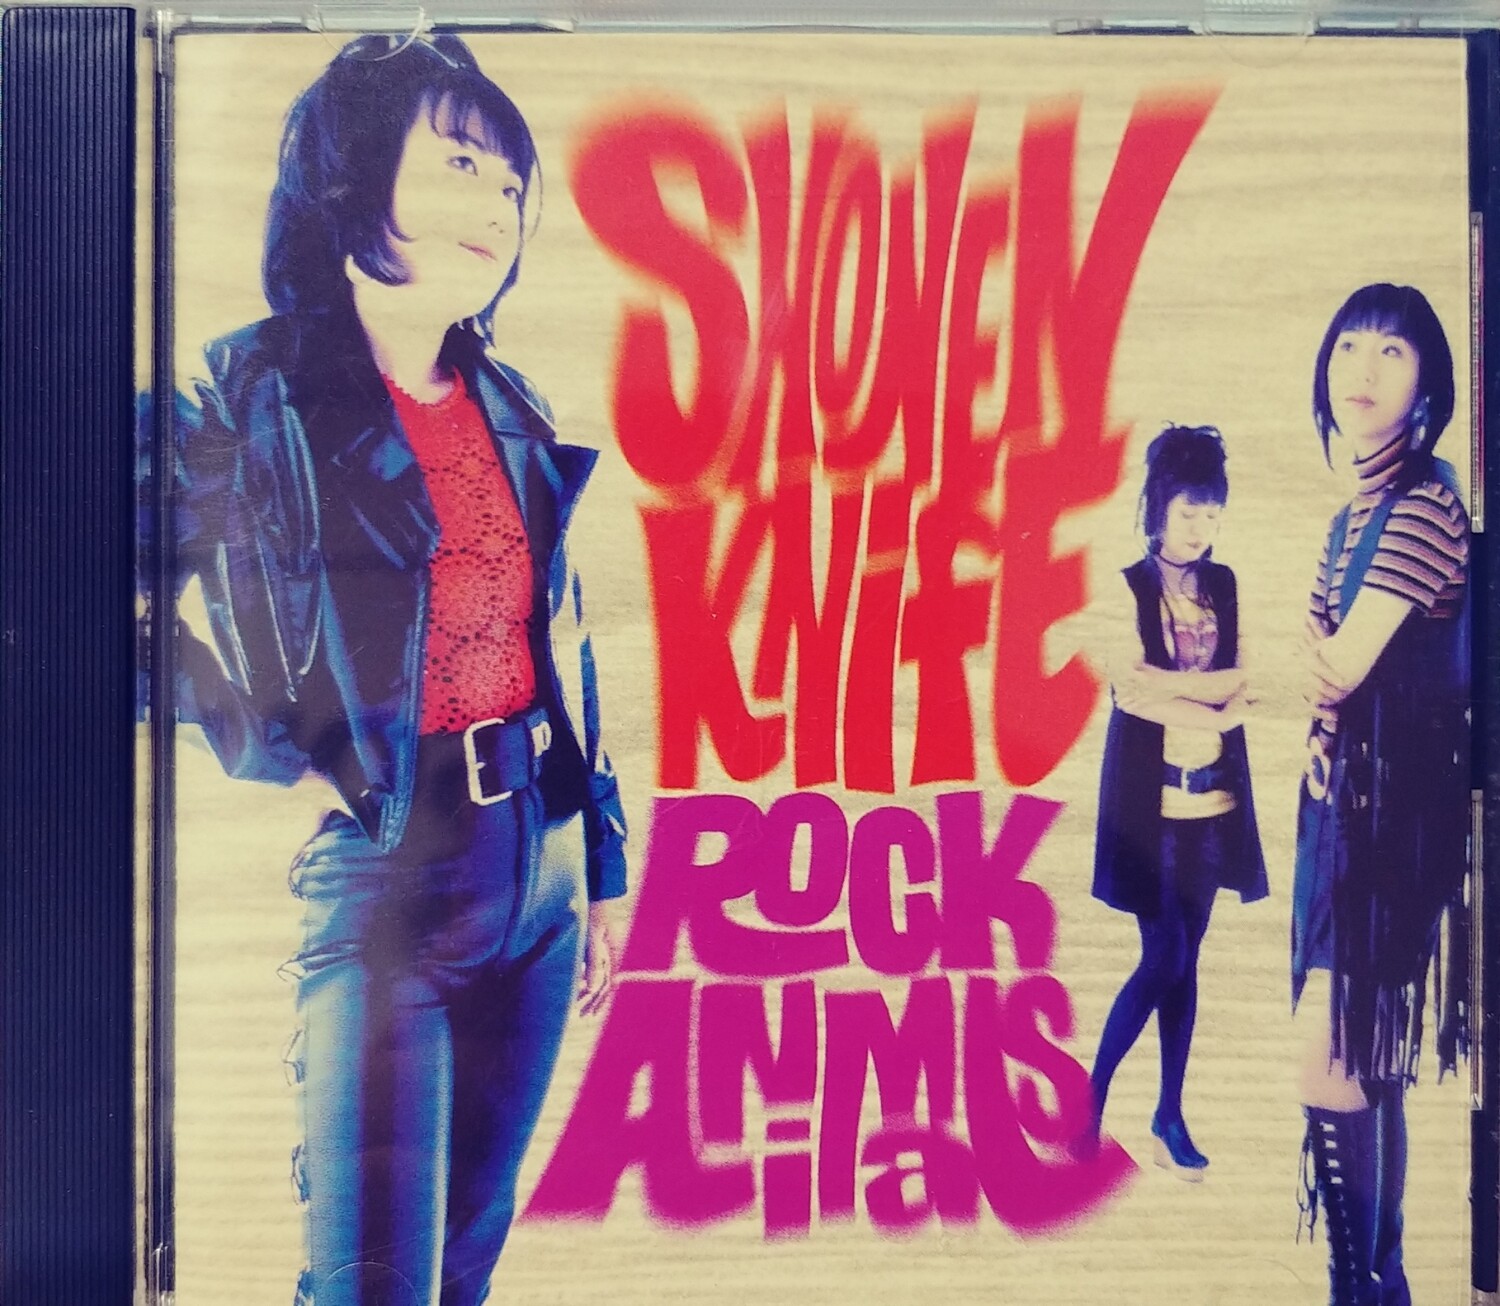 Shonen Knife - Rock Animals (CD)